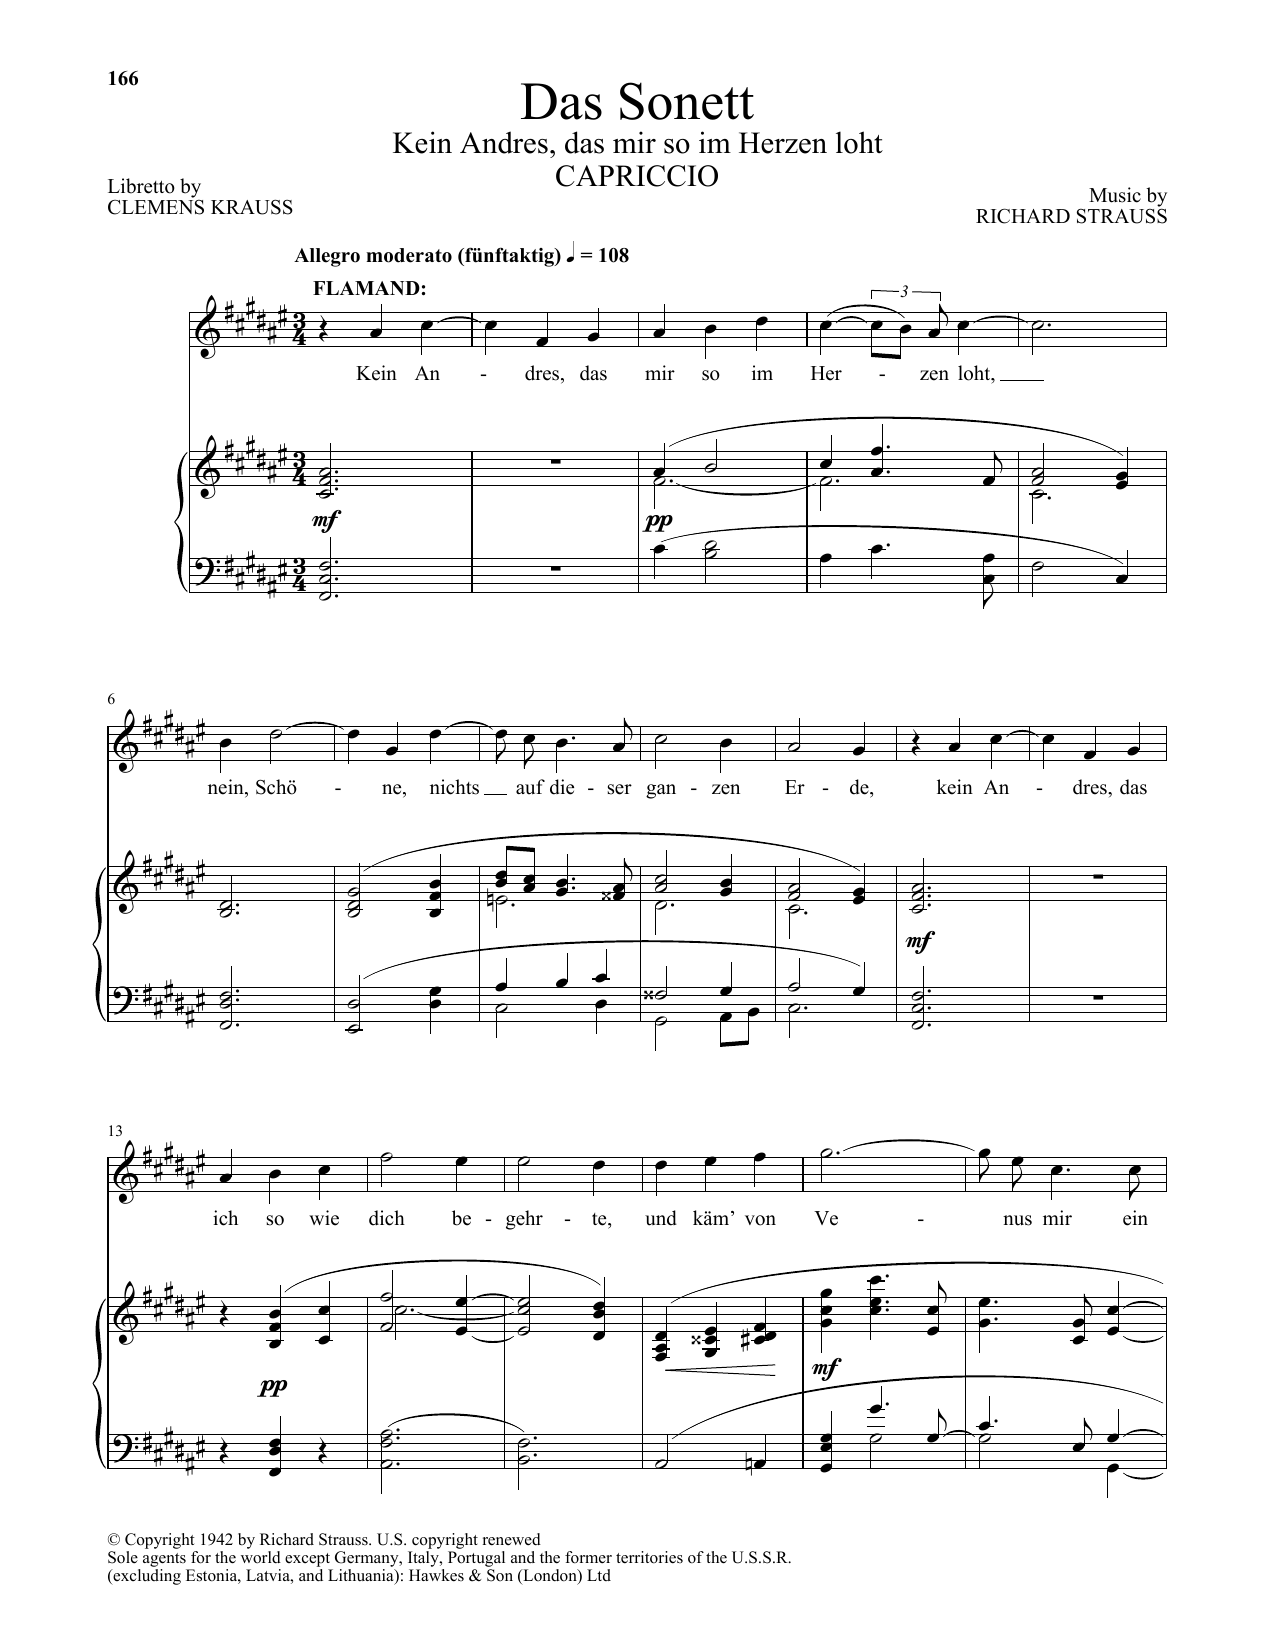 Clemens Krauss Das Sonett (Kein Andres, Das Mir So Im Herzen Loht) Sheet Music Notes & Chords for Piano & Vocal - Download or Print PDF